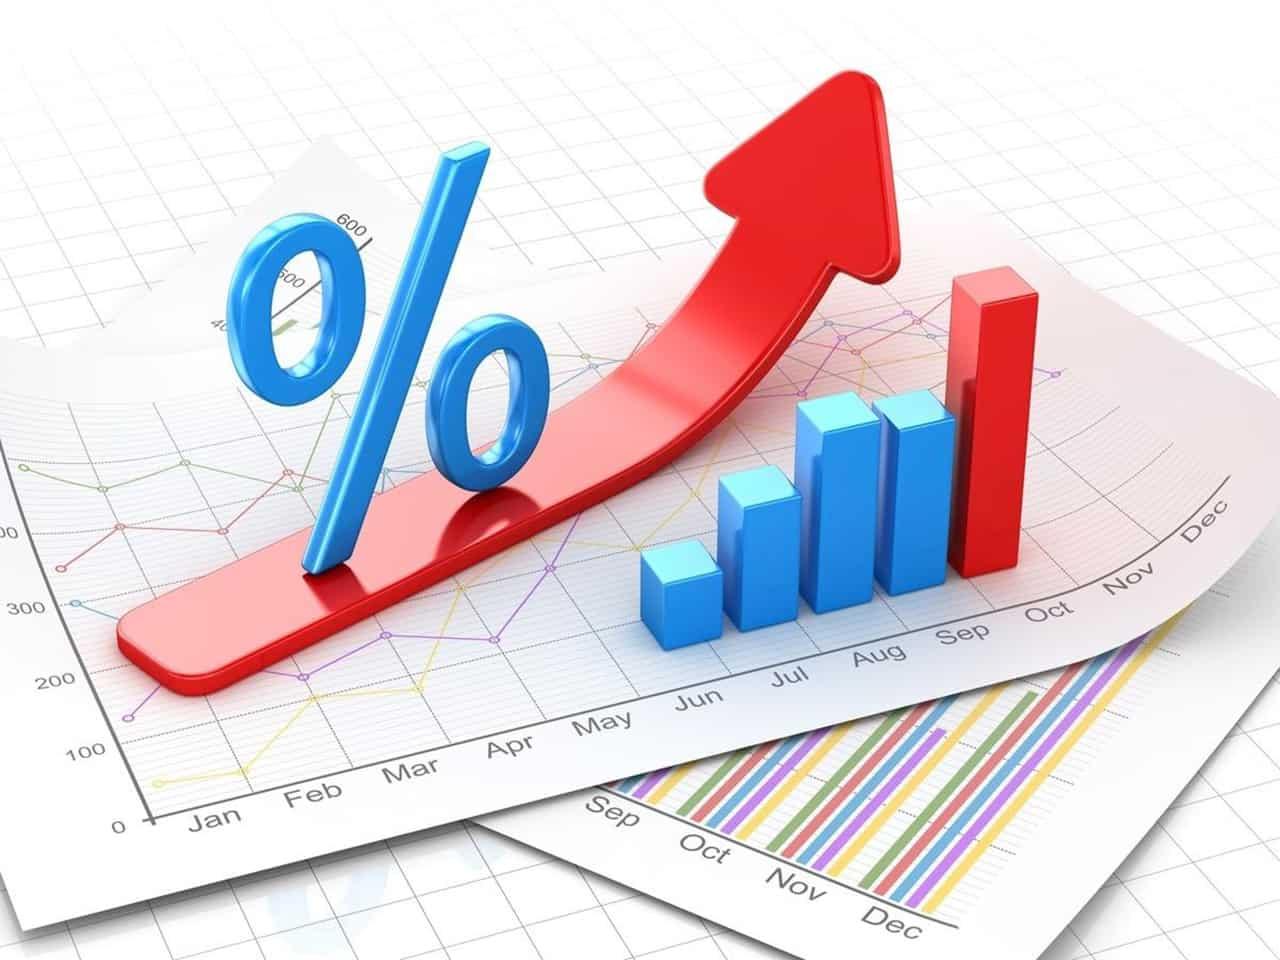 BC reduz a taxa básica de juros do país, a Selic, para 11,25%